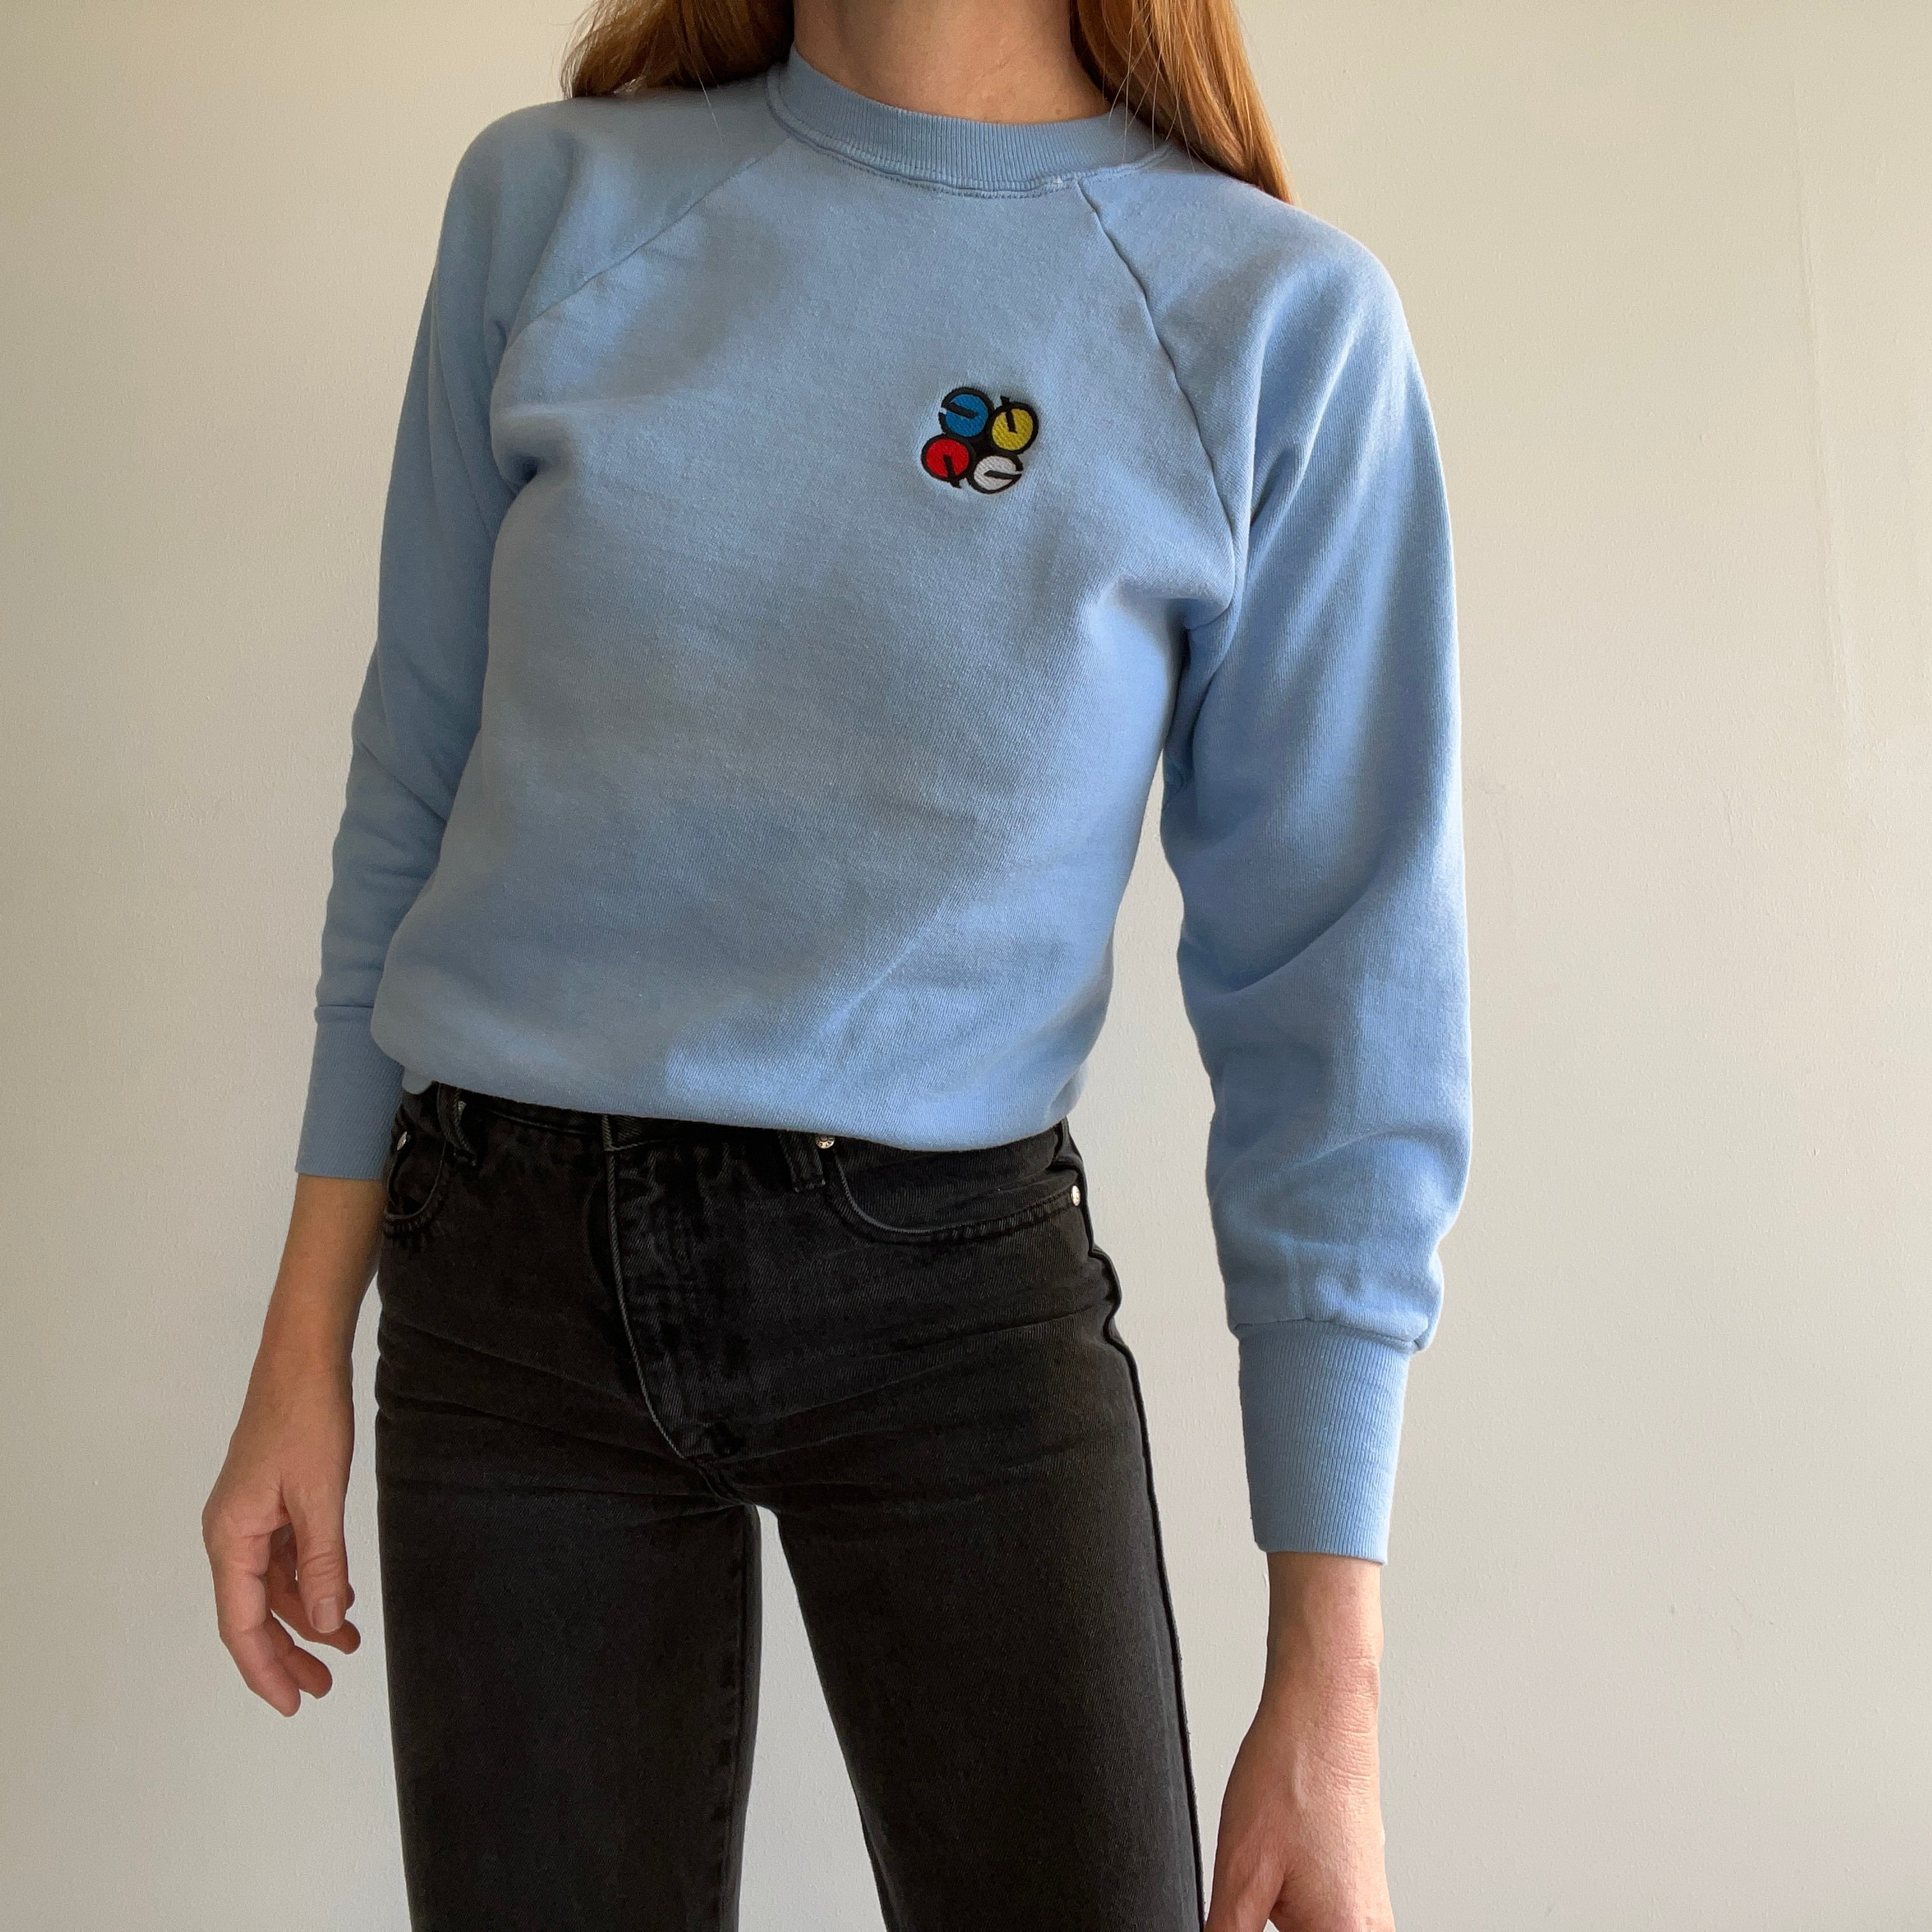 GG 1980s GQ Sweatshirt by Signal